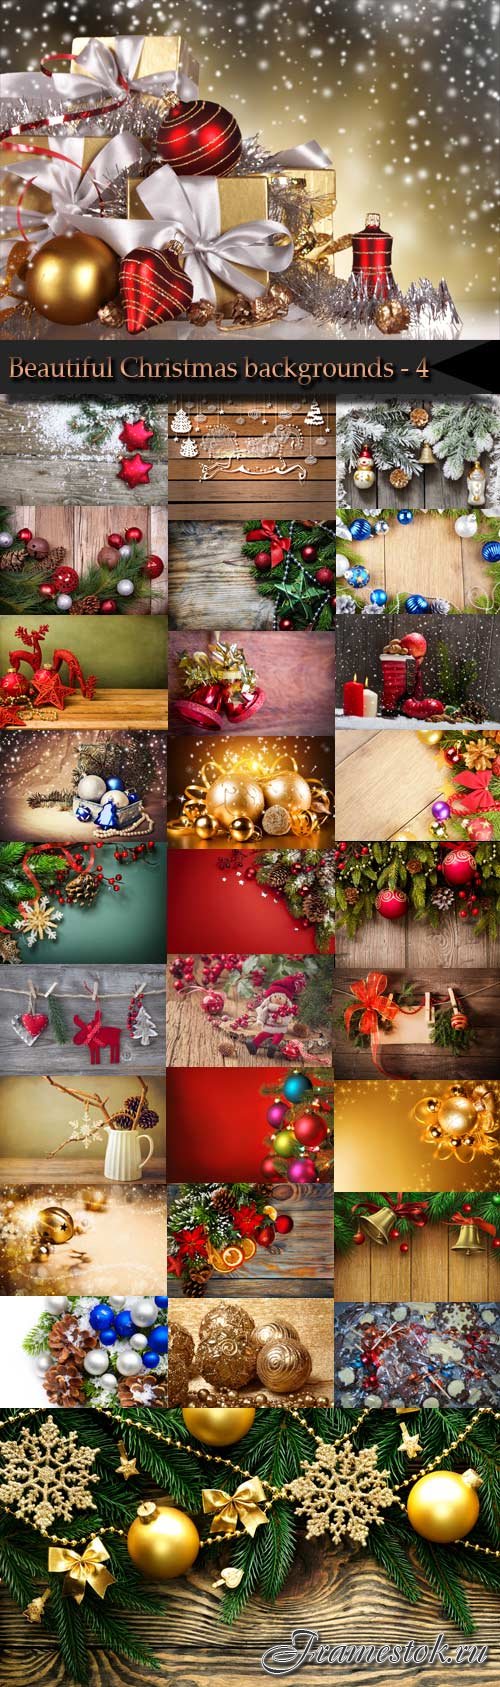 Beautiful Christmas backgrounds - 4